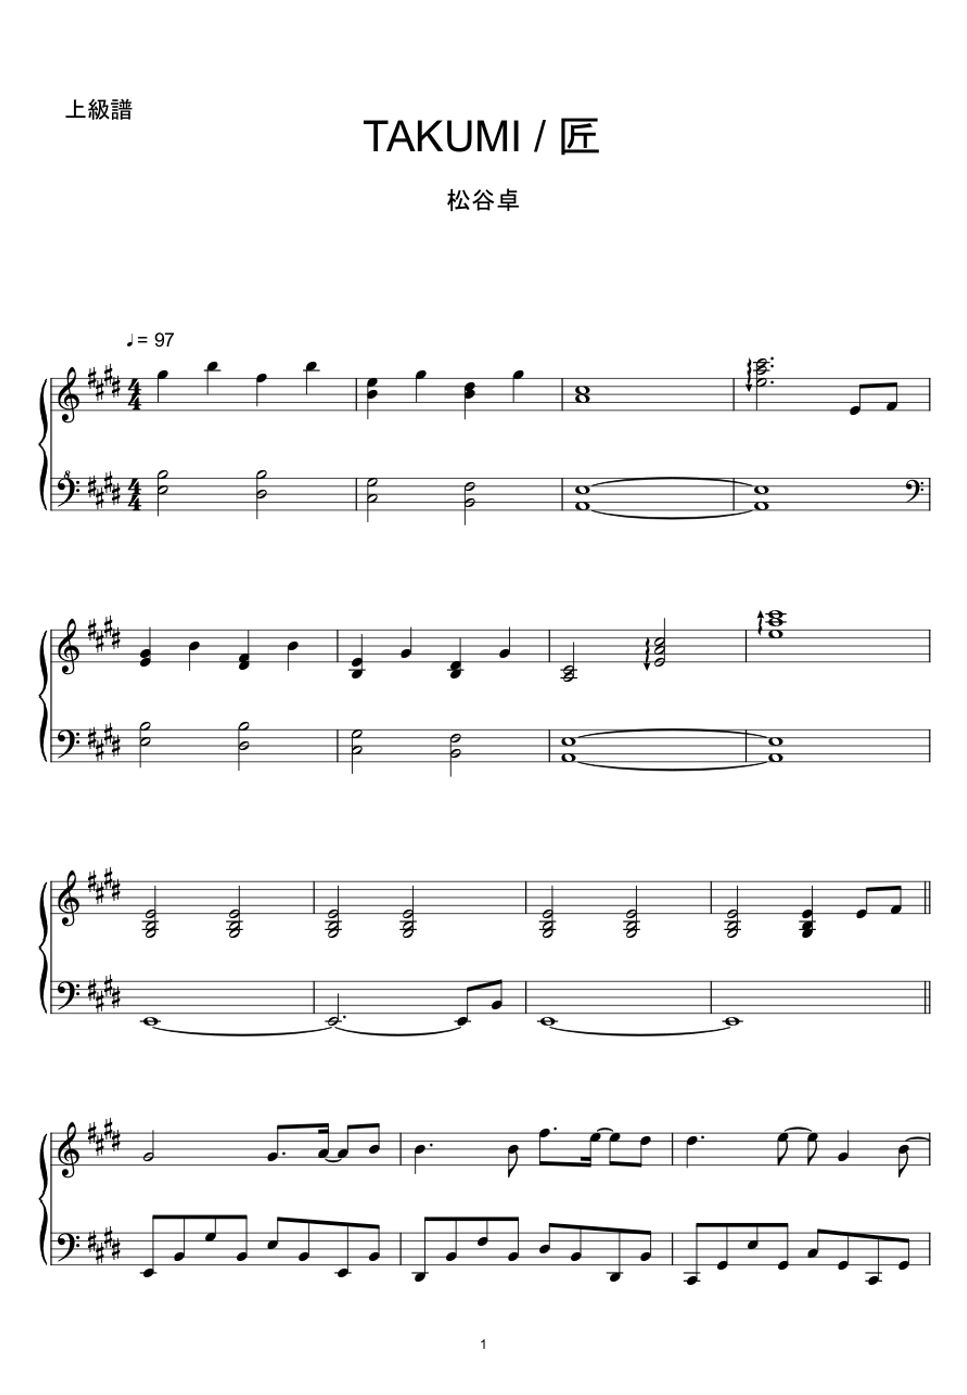 Matsutani Suguru / 松谷卓 - TAKUMI / 匠 【上級】 (楽譜, Sheet Music, MIDI,) by sayu